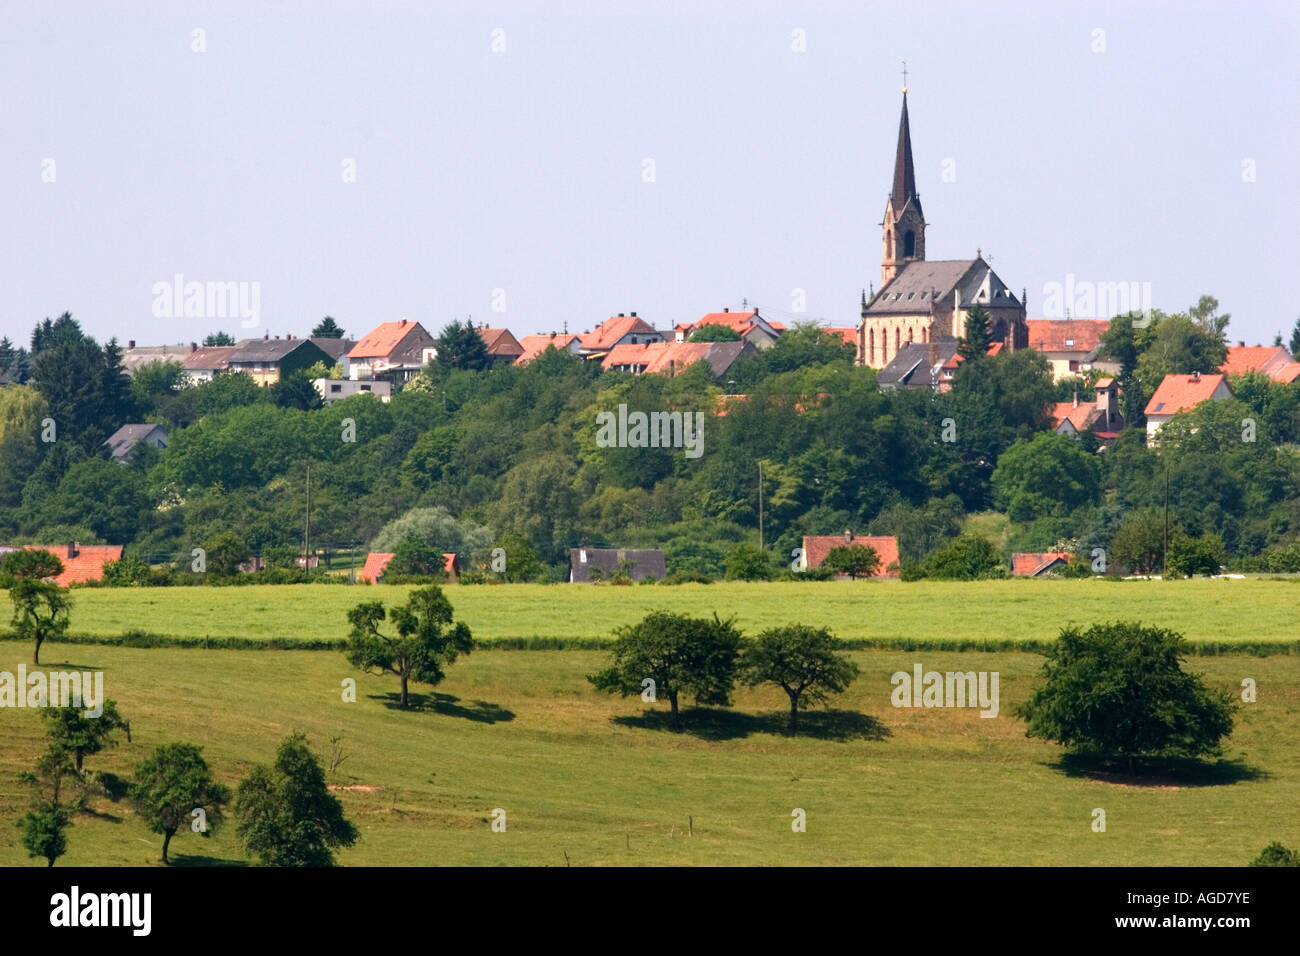 A village in northwest Germany near Blieskastel. Stock Photo